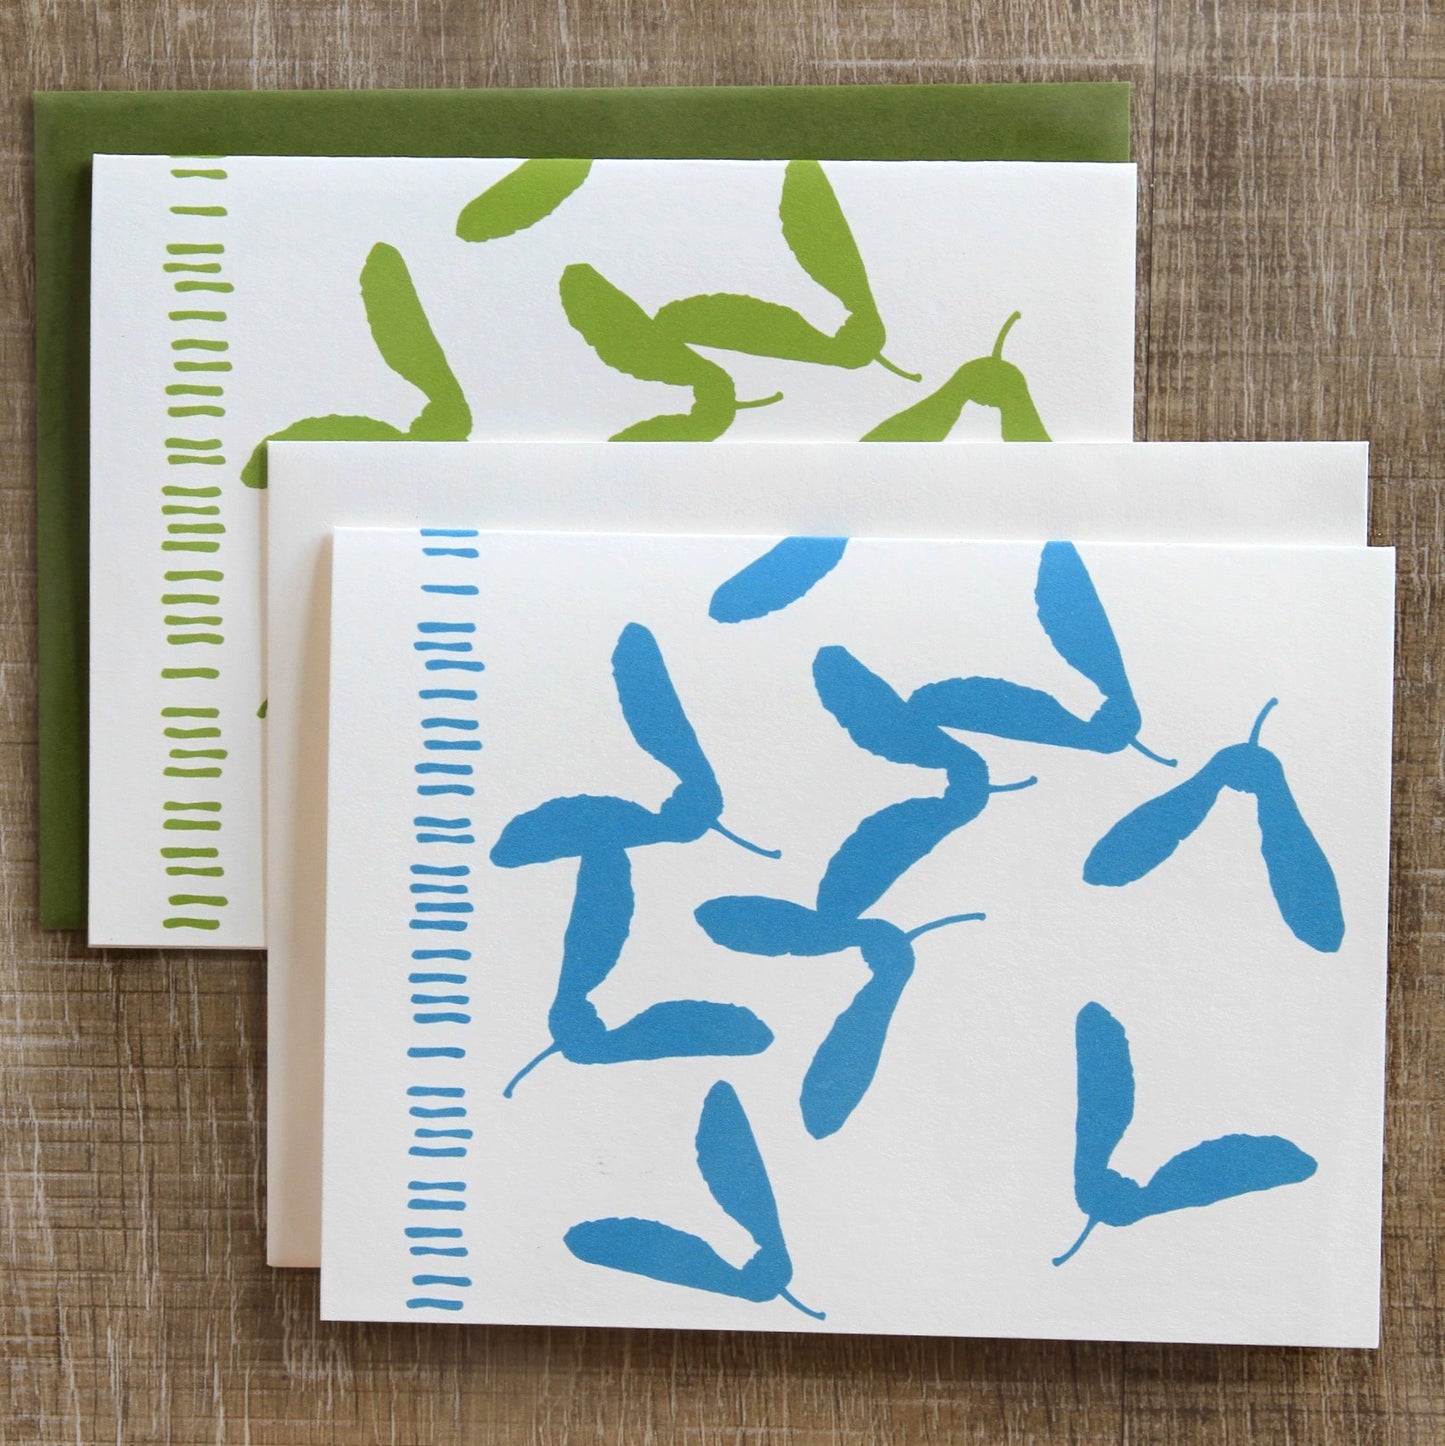 6 Samara Notecards in Aqua & Leaf